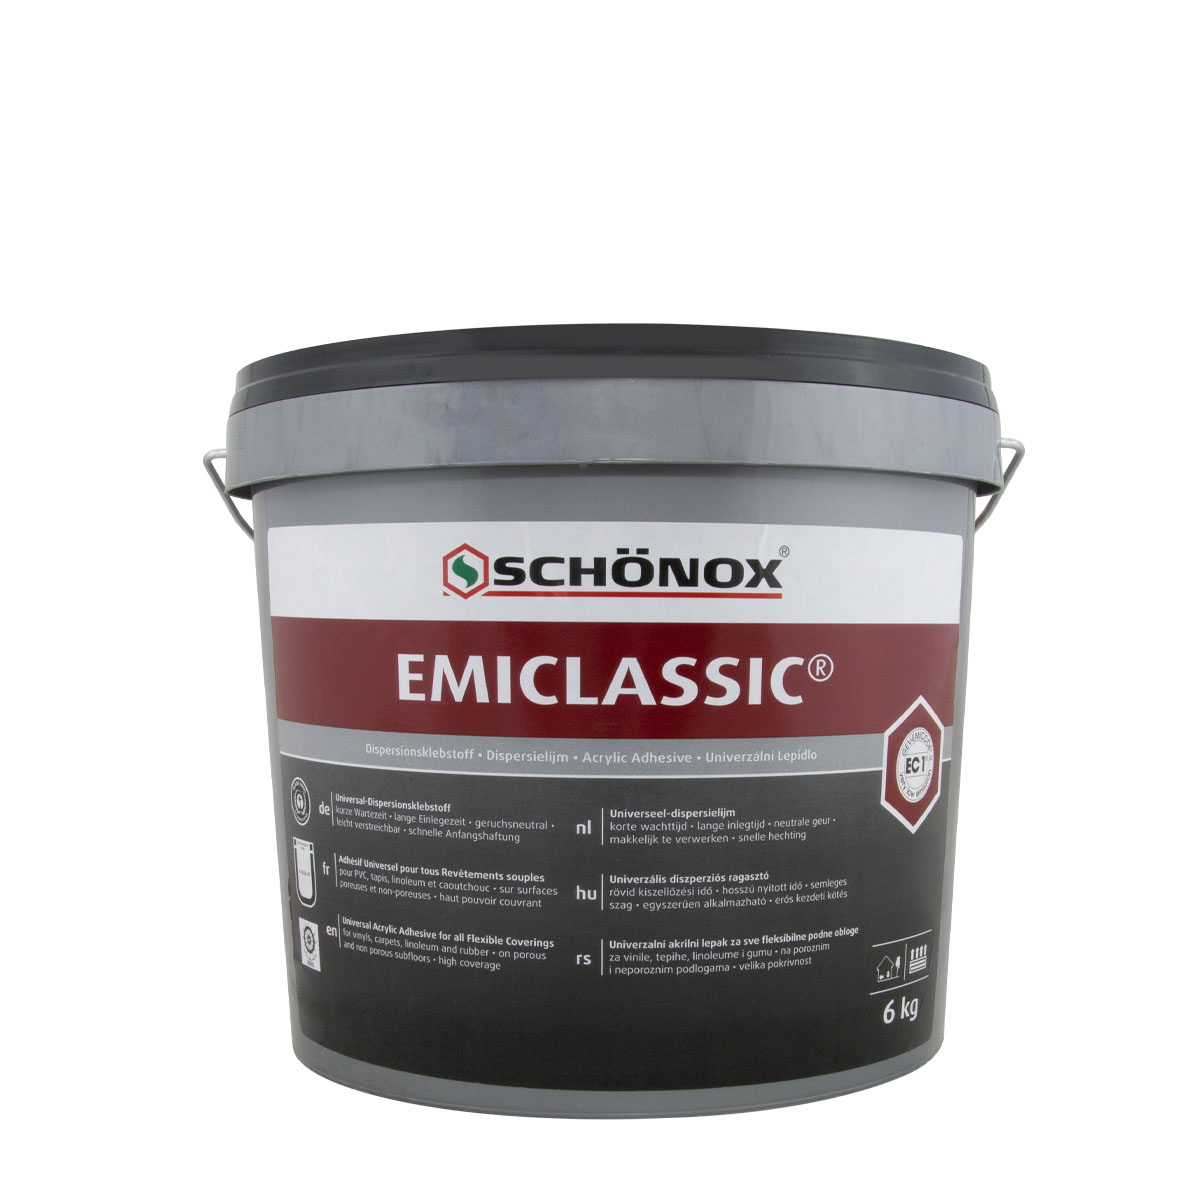 Schönox Emiclassic 6kg, Universal-Dispersionsklebstoff